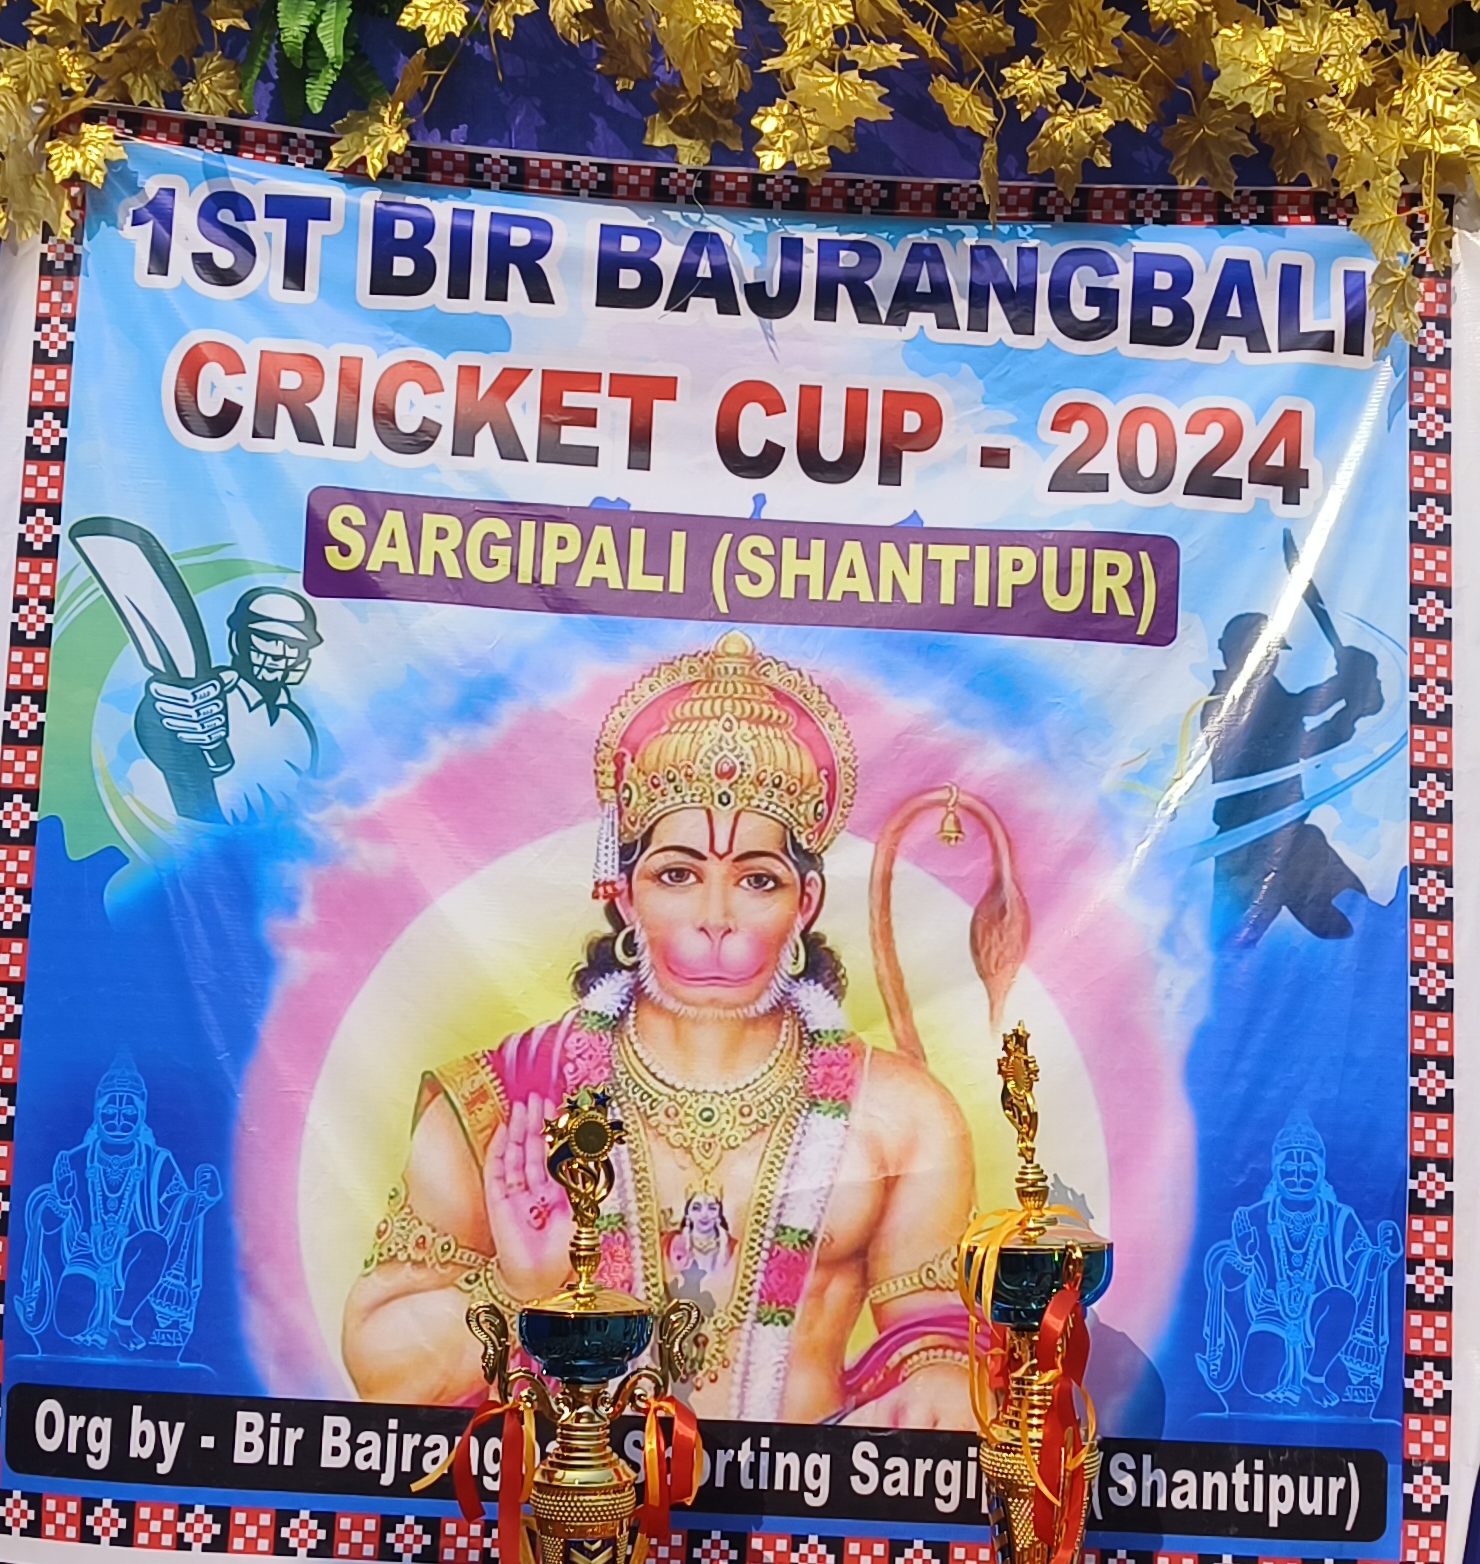  1th Bir bajrangbali cricket cup sargipali ( shantipur)